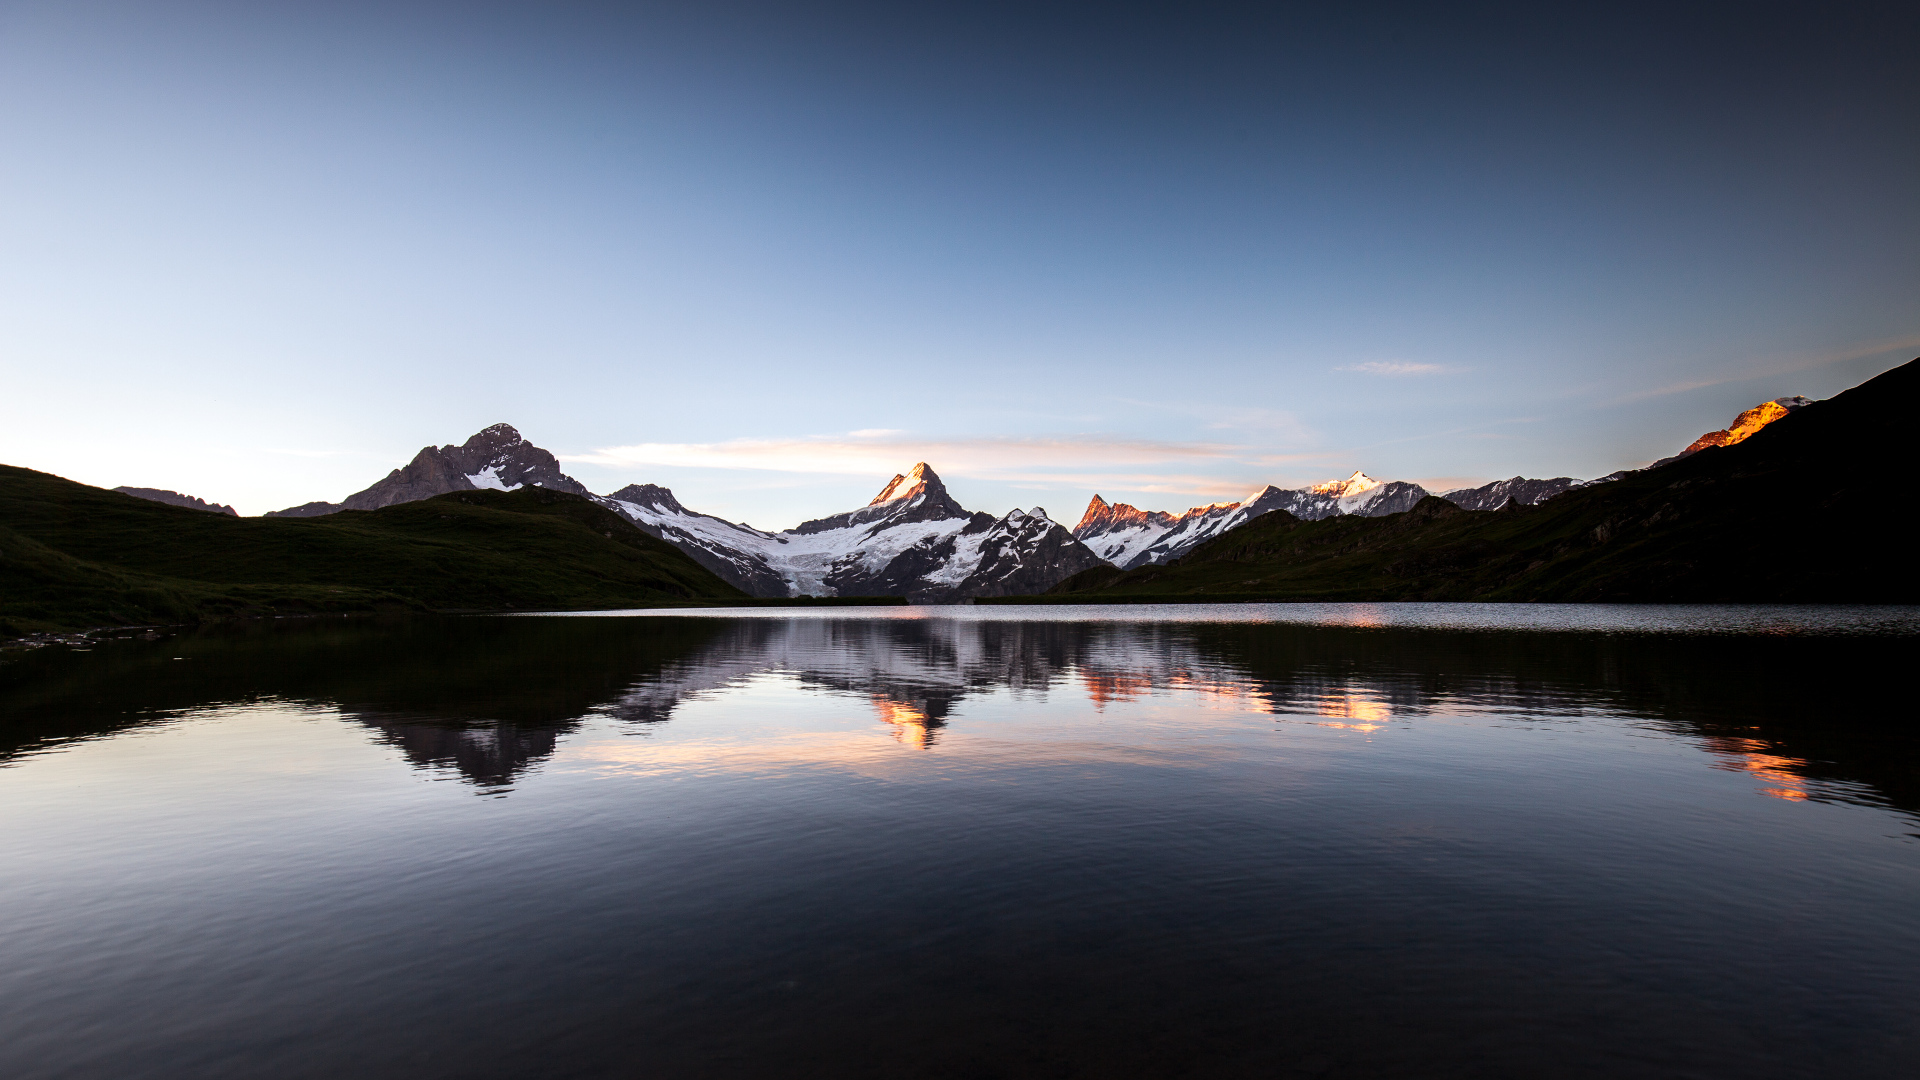 Calm mountain lake near the snowy mountains